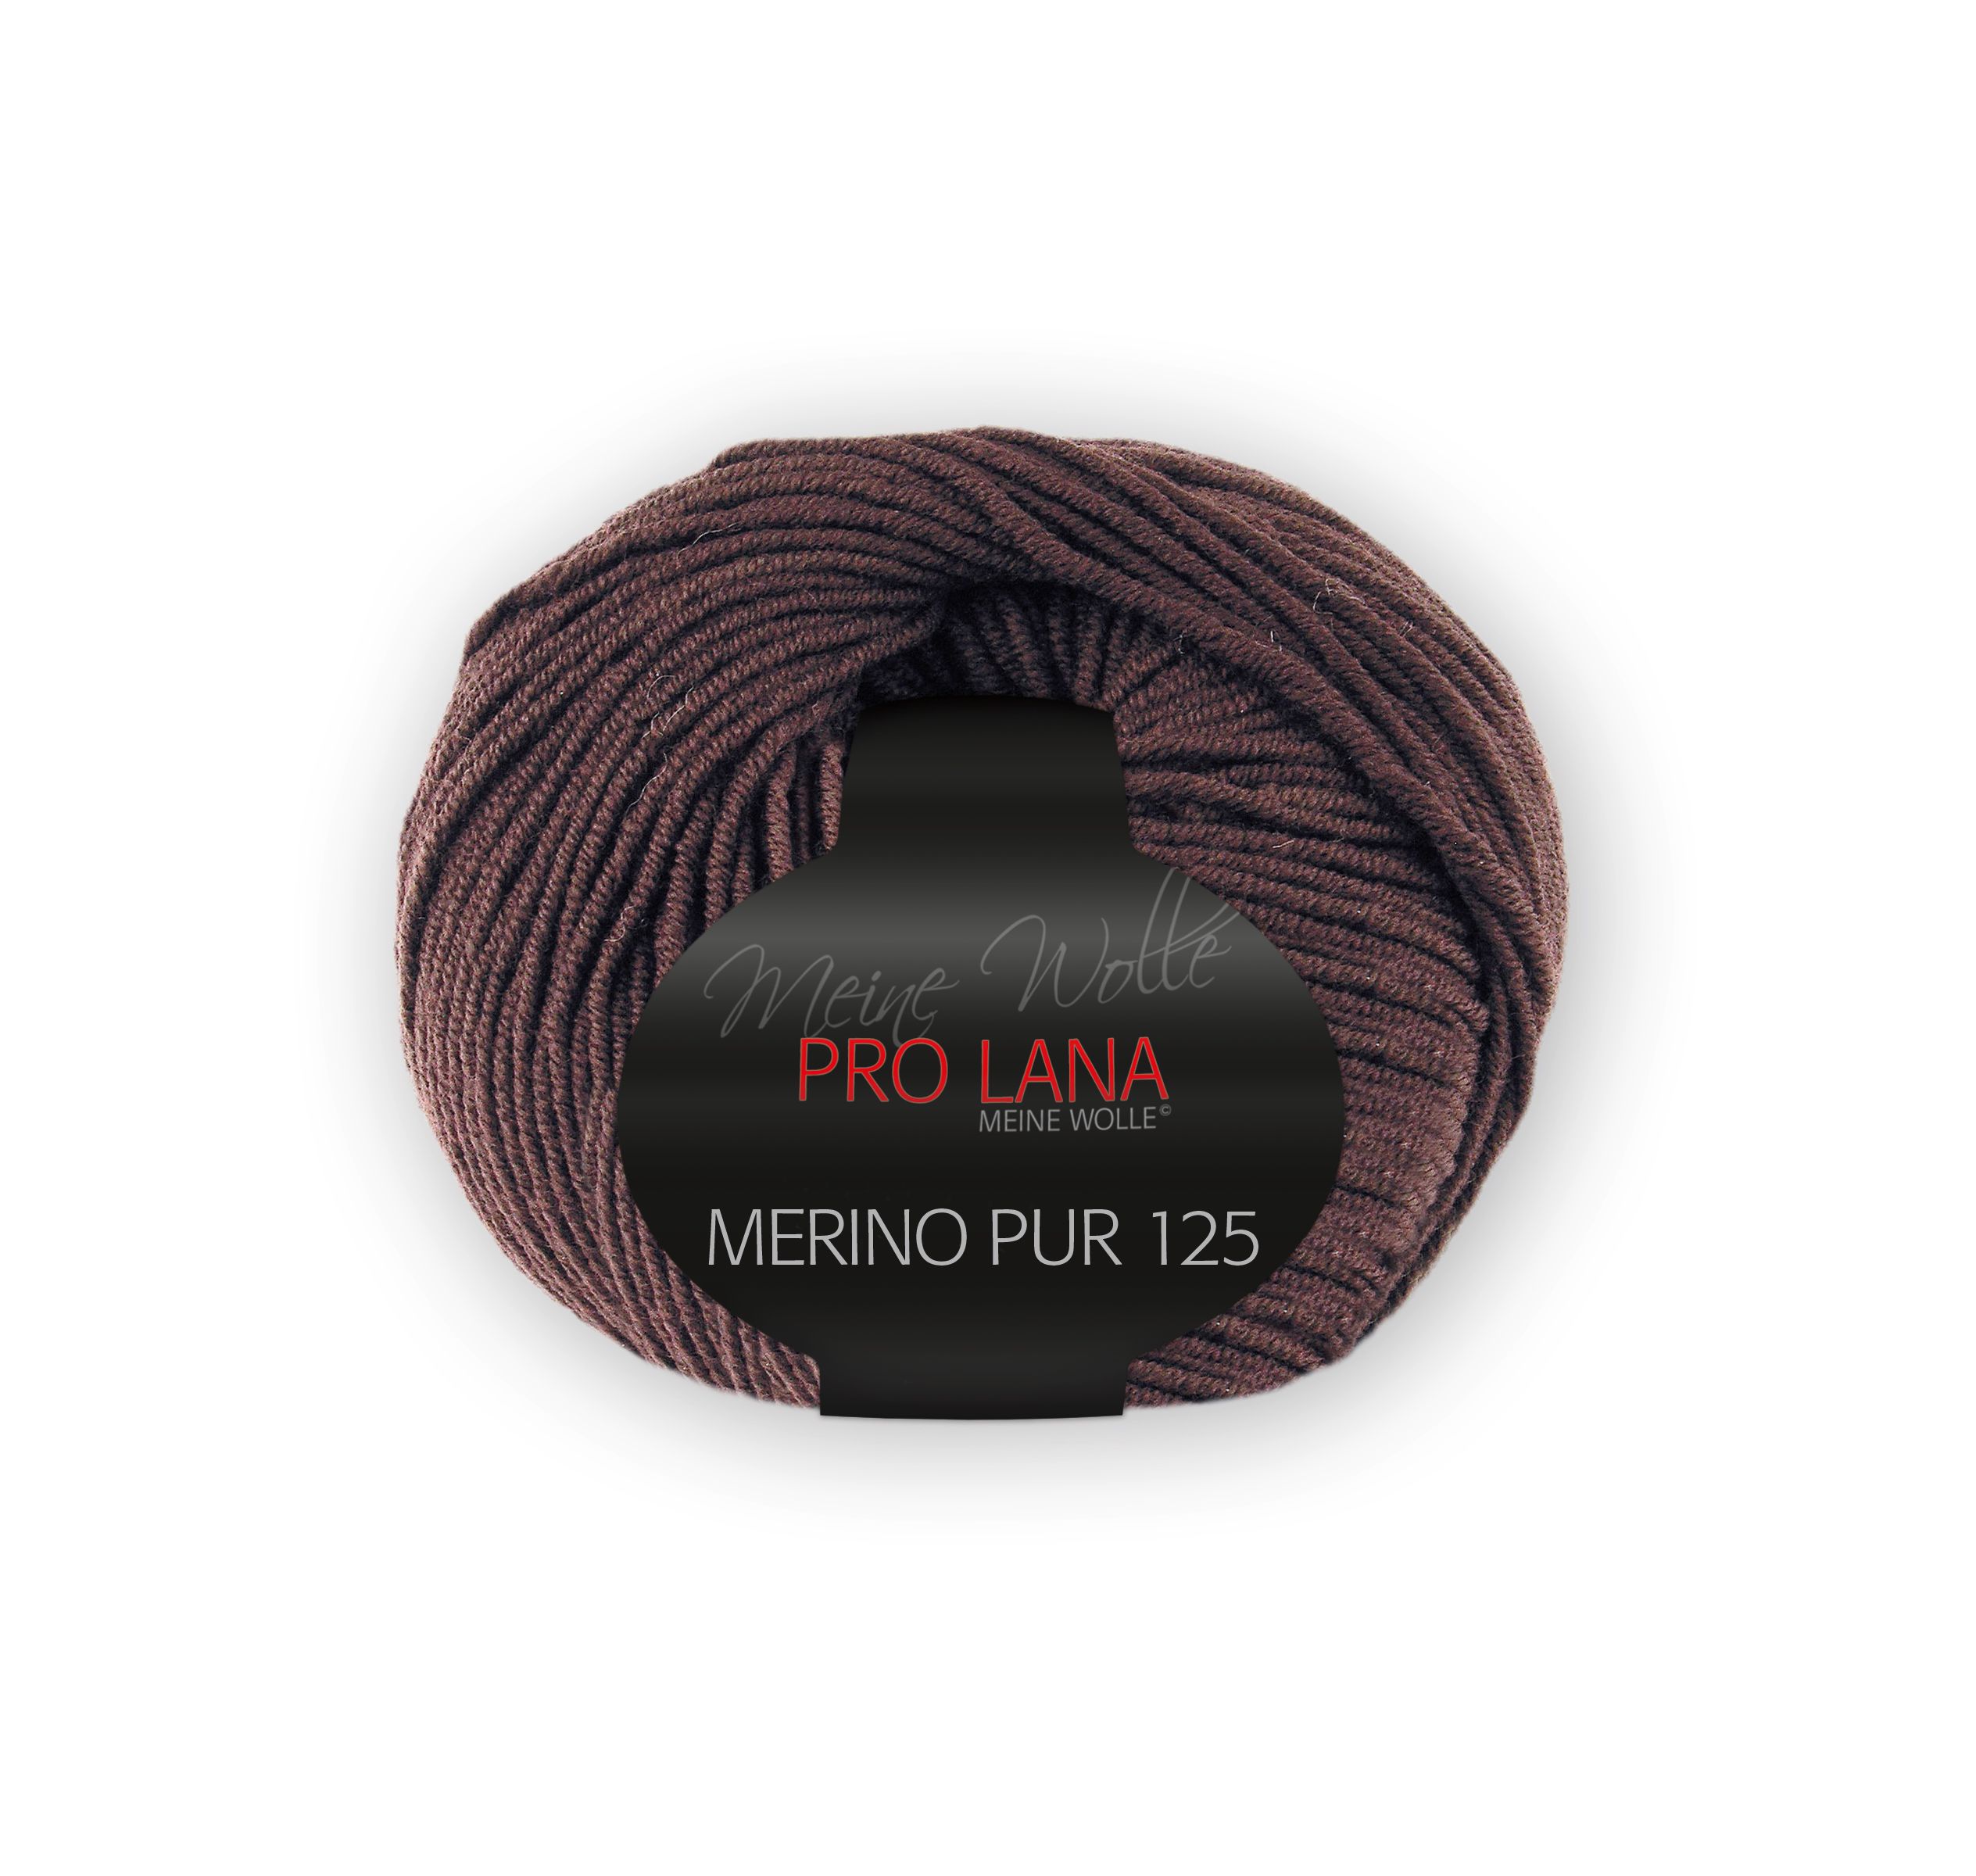 Pro Lana Merino Pur125 - Braun 11